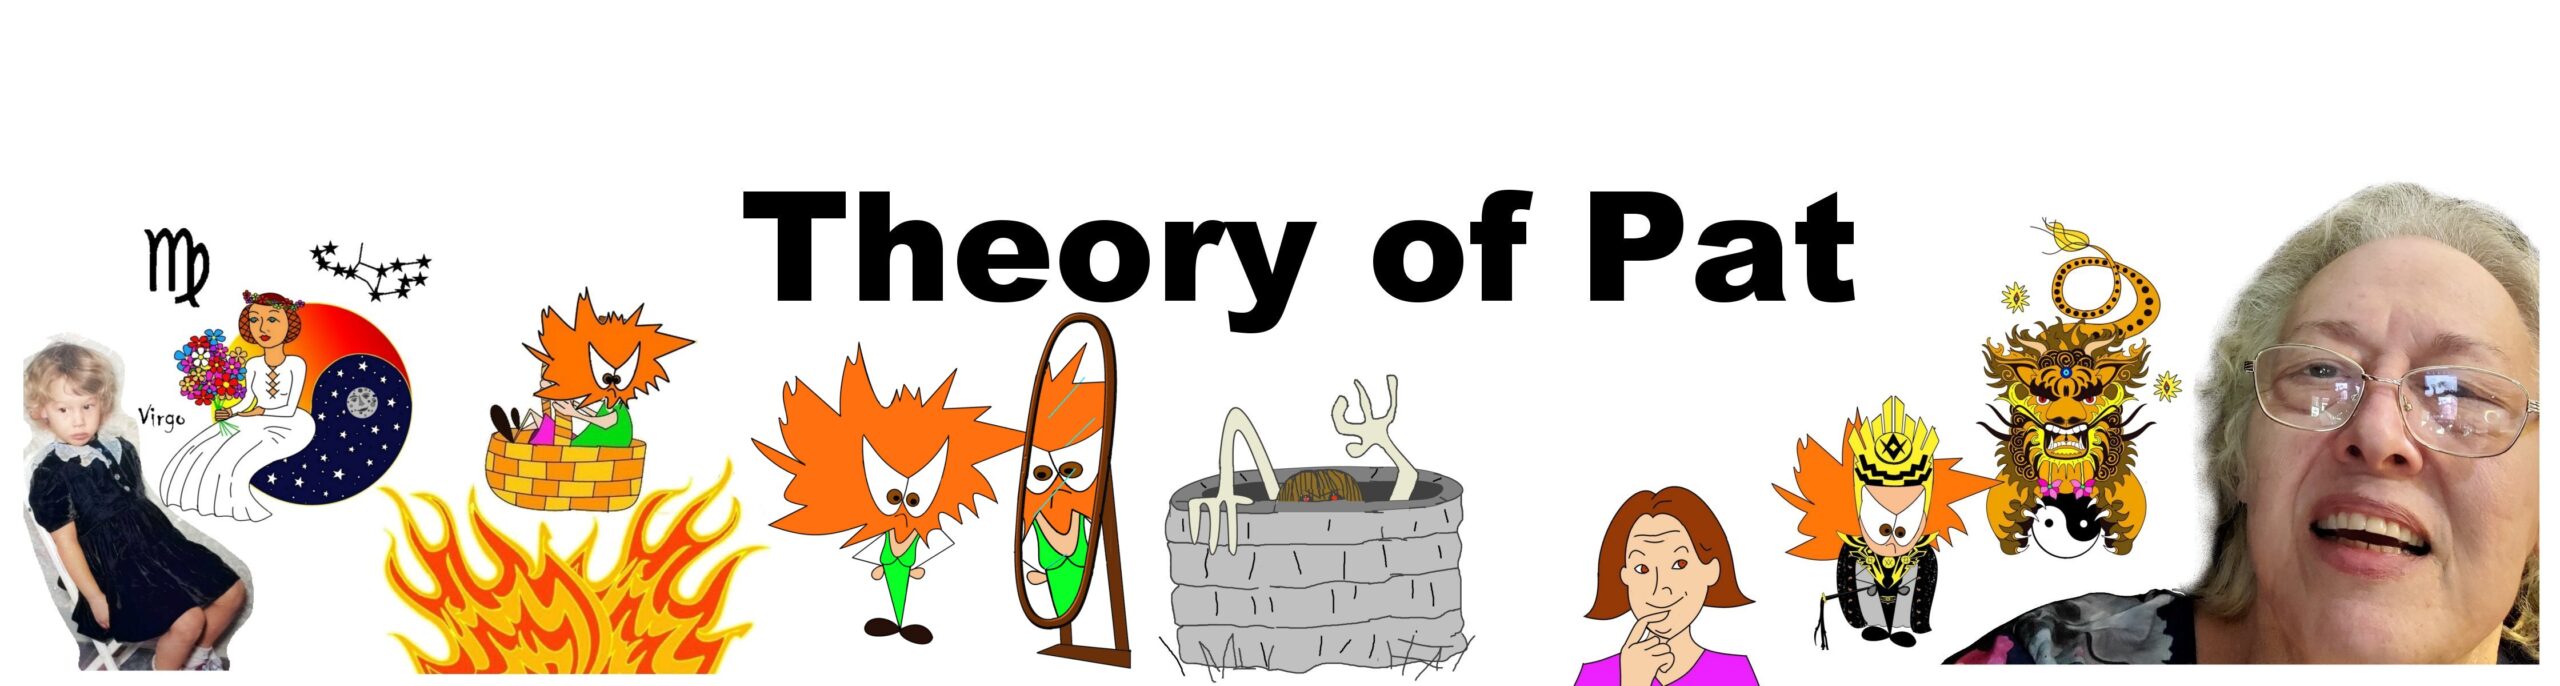 Theory of Pat